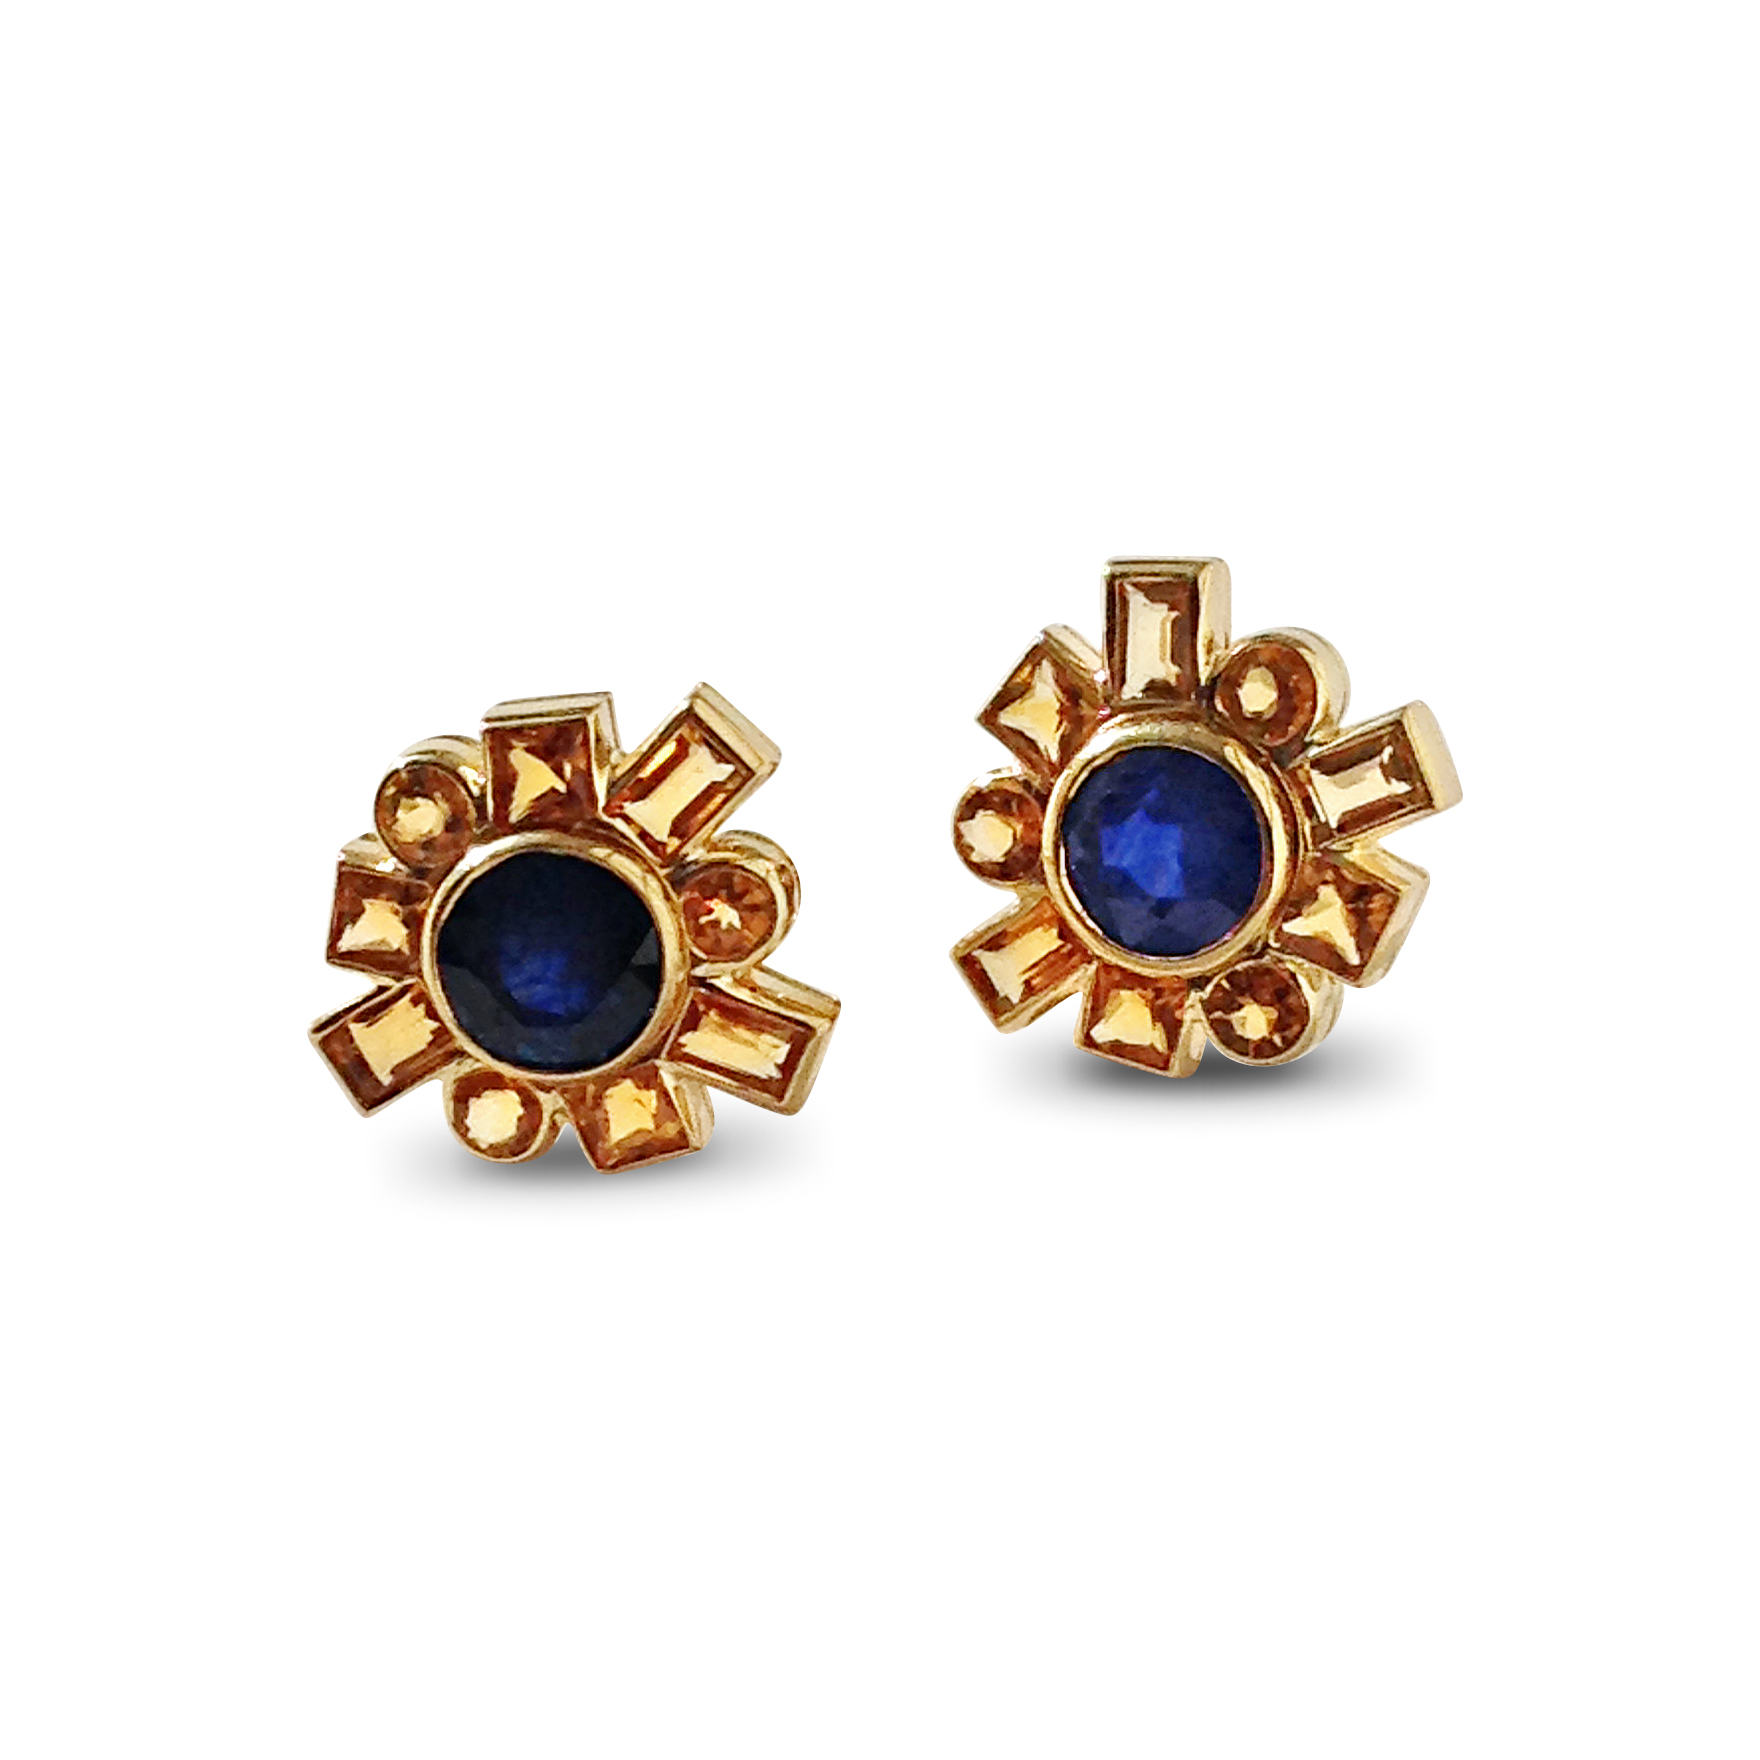 Sapphire-and-citrine-earrings-1.jpg